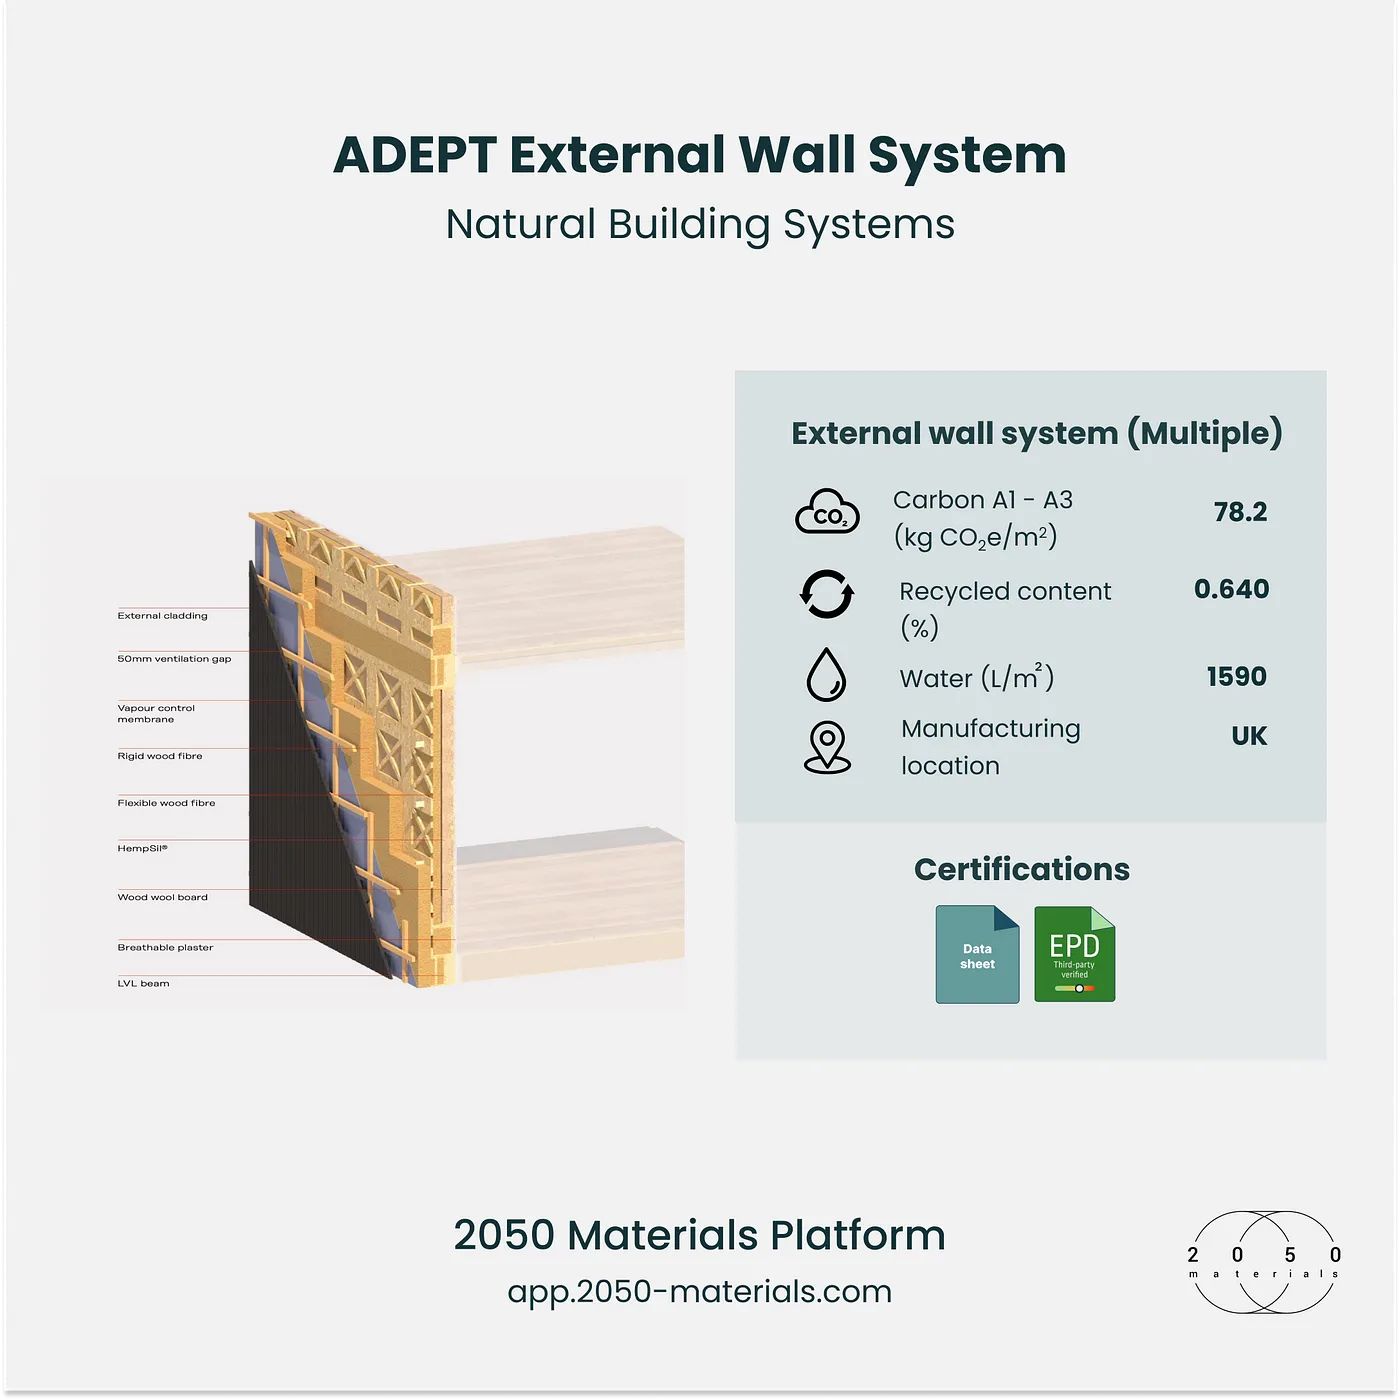 ADEPT External Wall System on 2050 Materials Platform